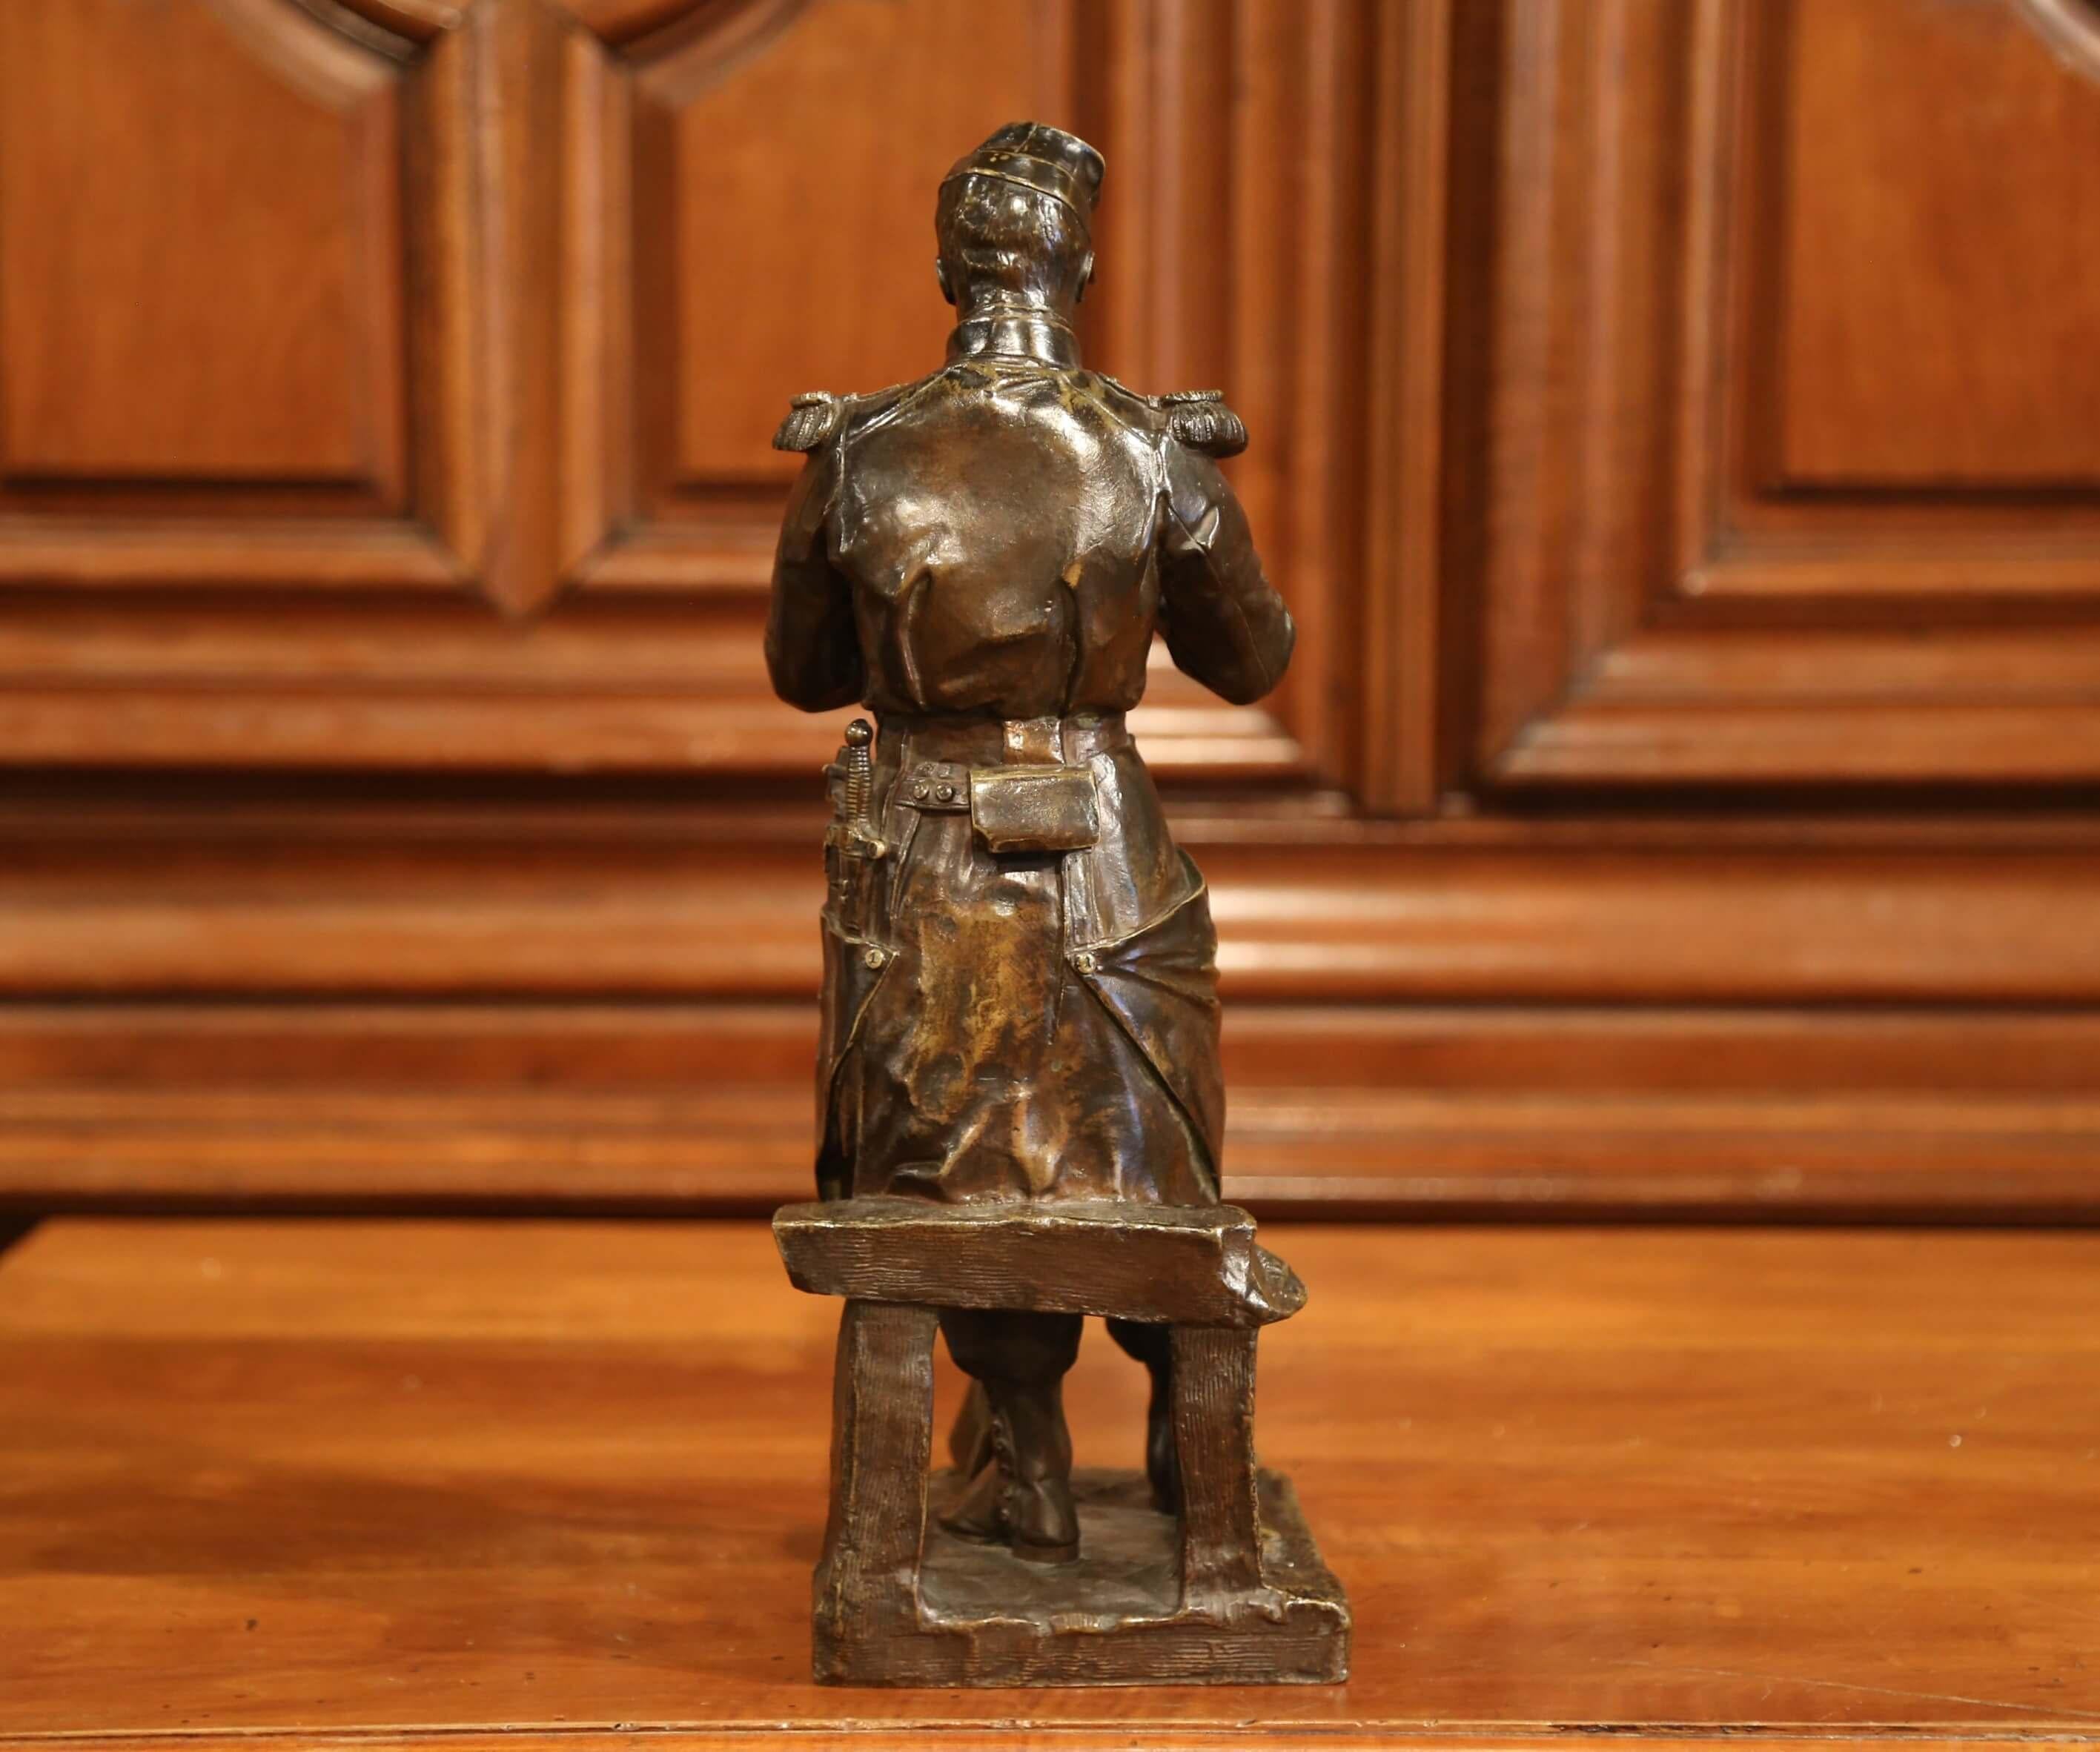 19th Century French Patinated Bronze Sculpture “La Halte” Signed L. Mennessier For Sale 5